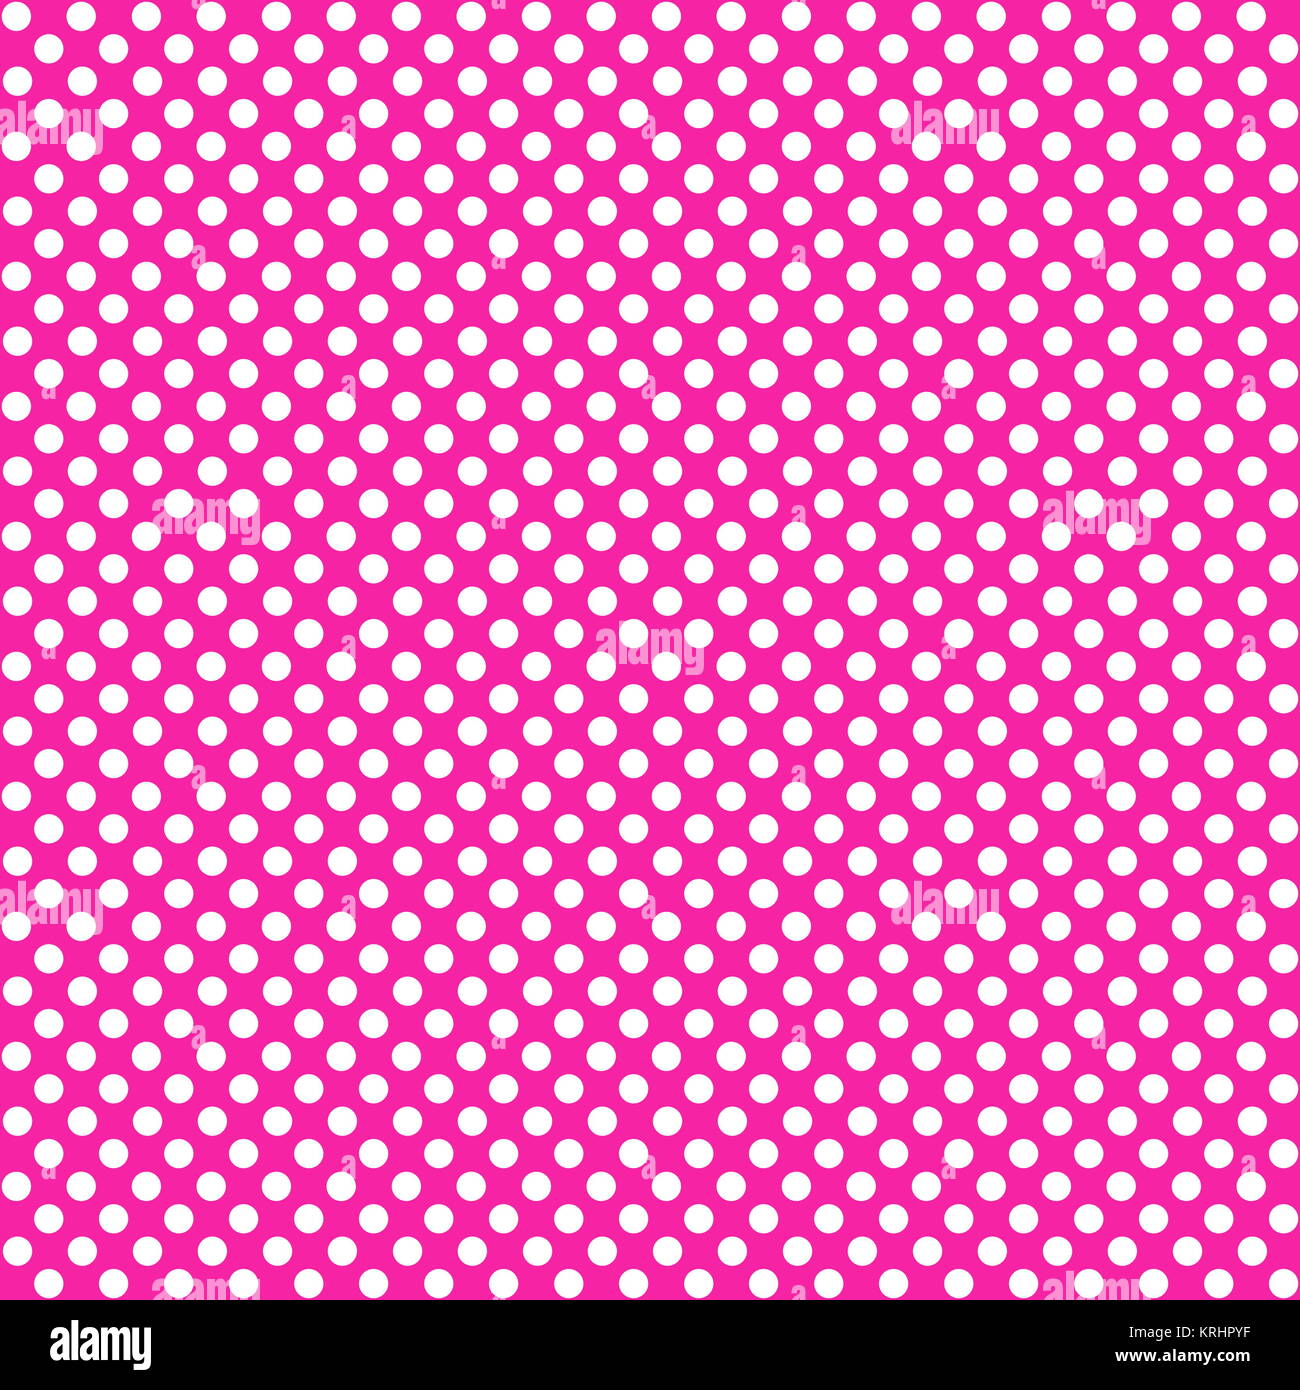 Sfondo maculato rosa bianco Foto stock - Alamy